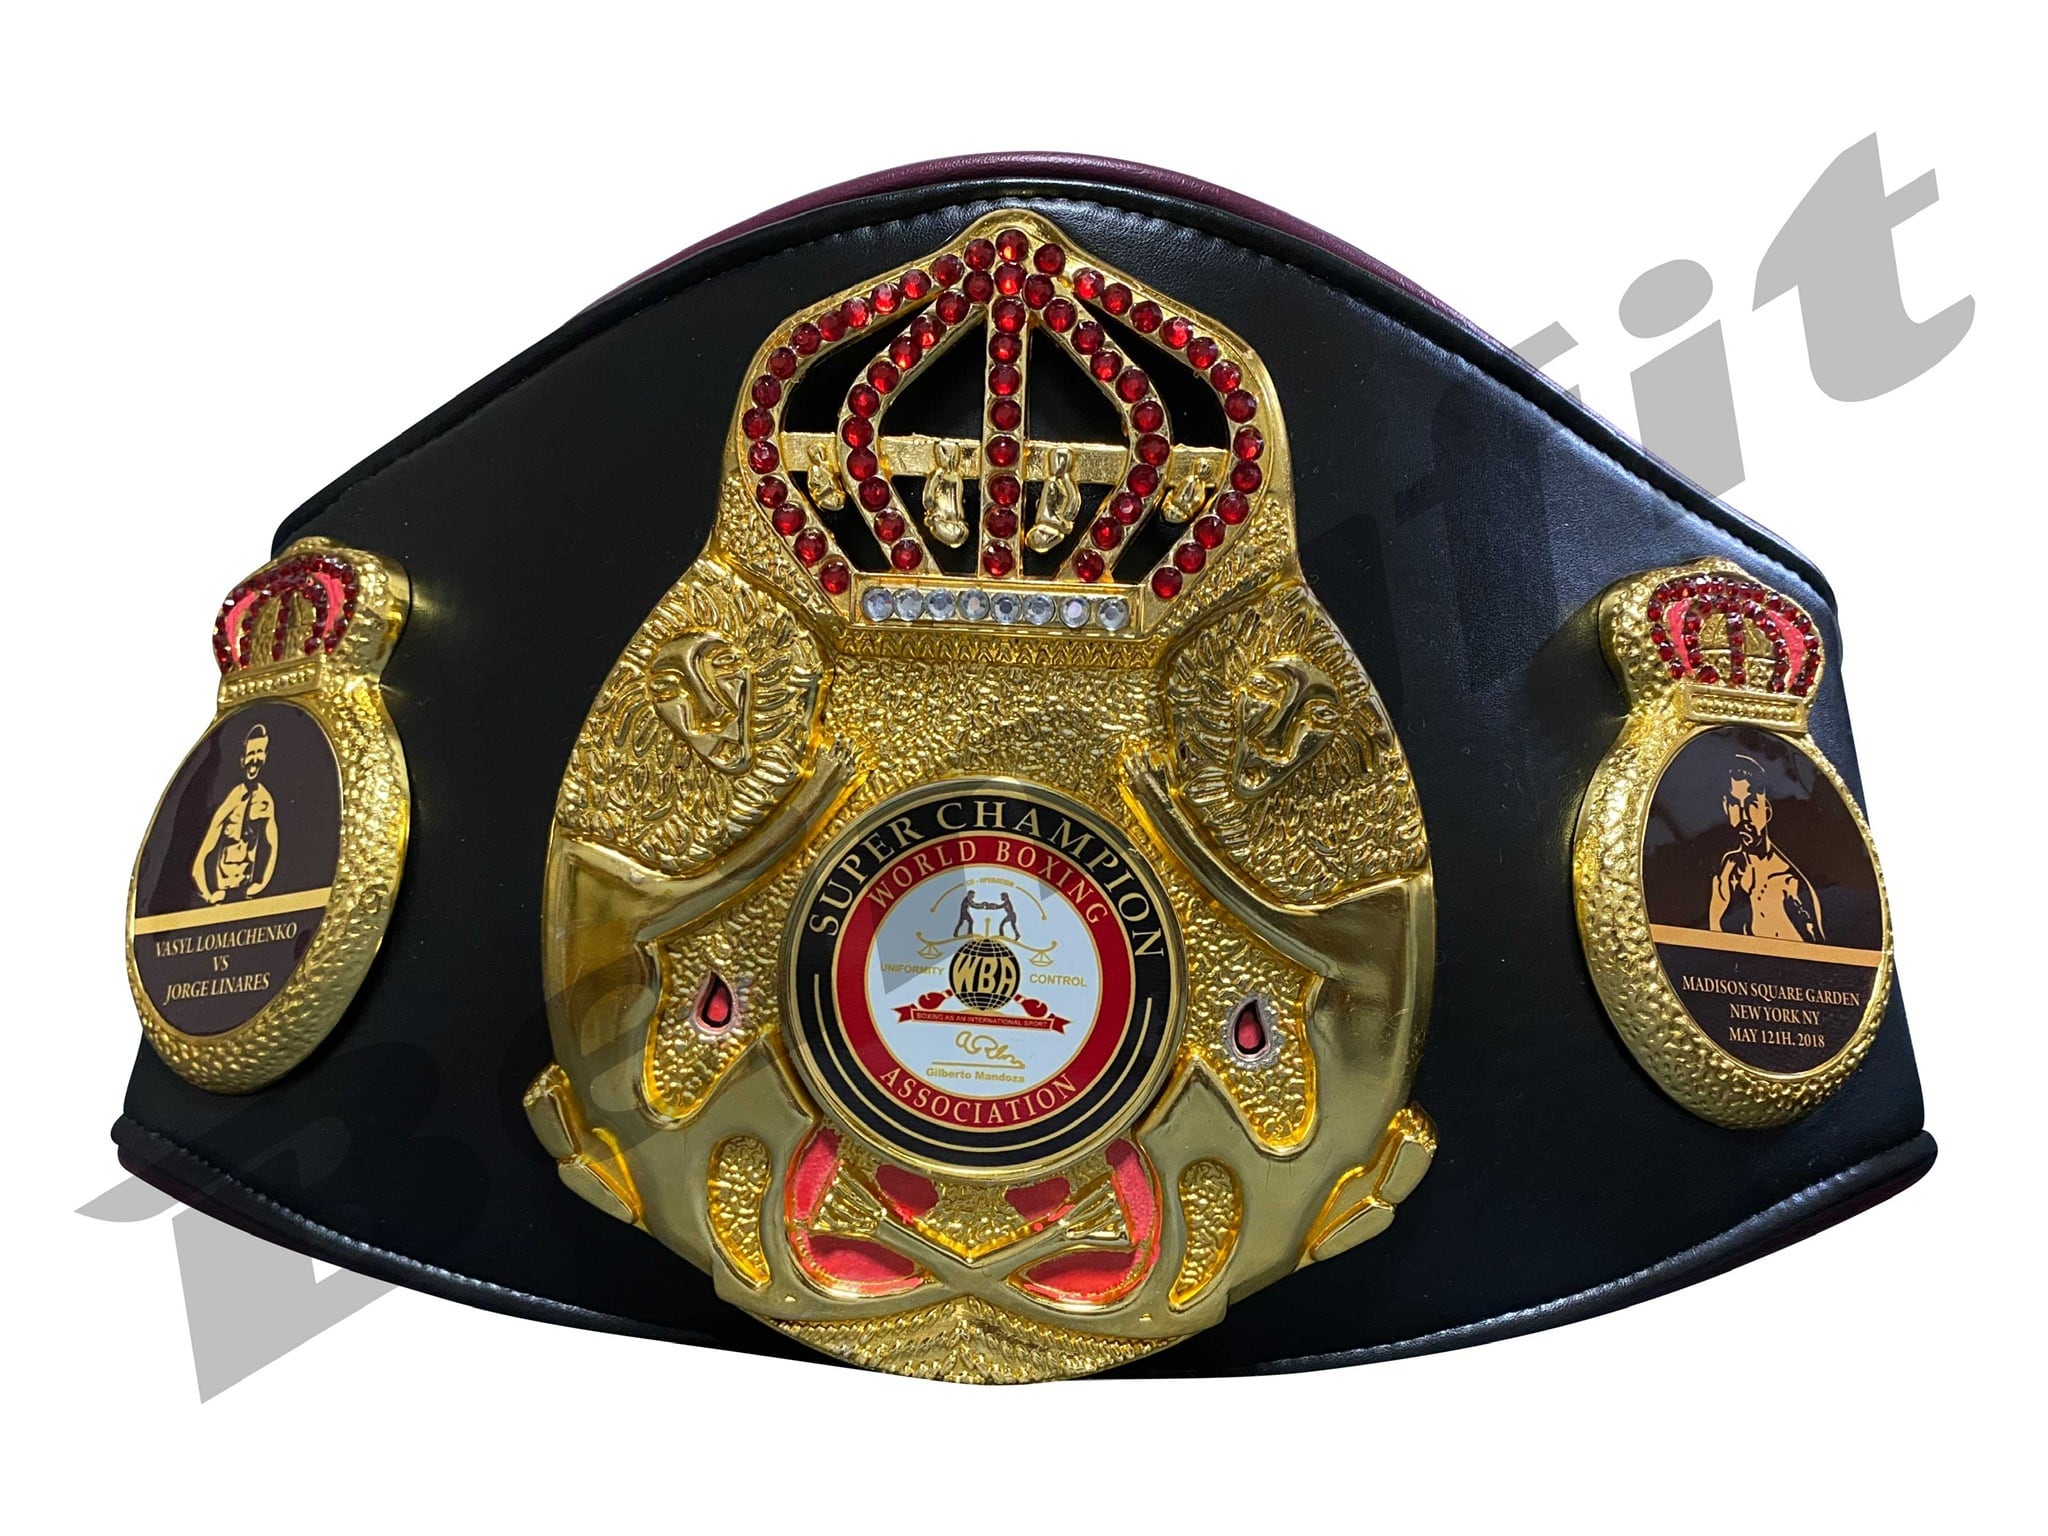 WBC.WBO.WBAチャンピオンベルト3団体レプリカ | www.innoveering.net